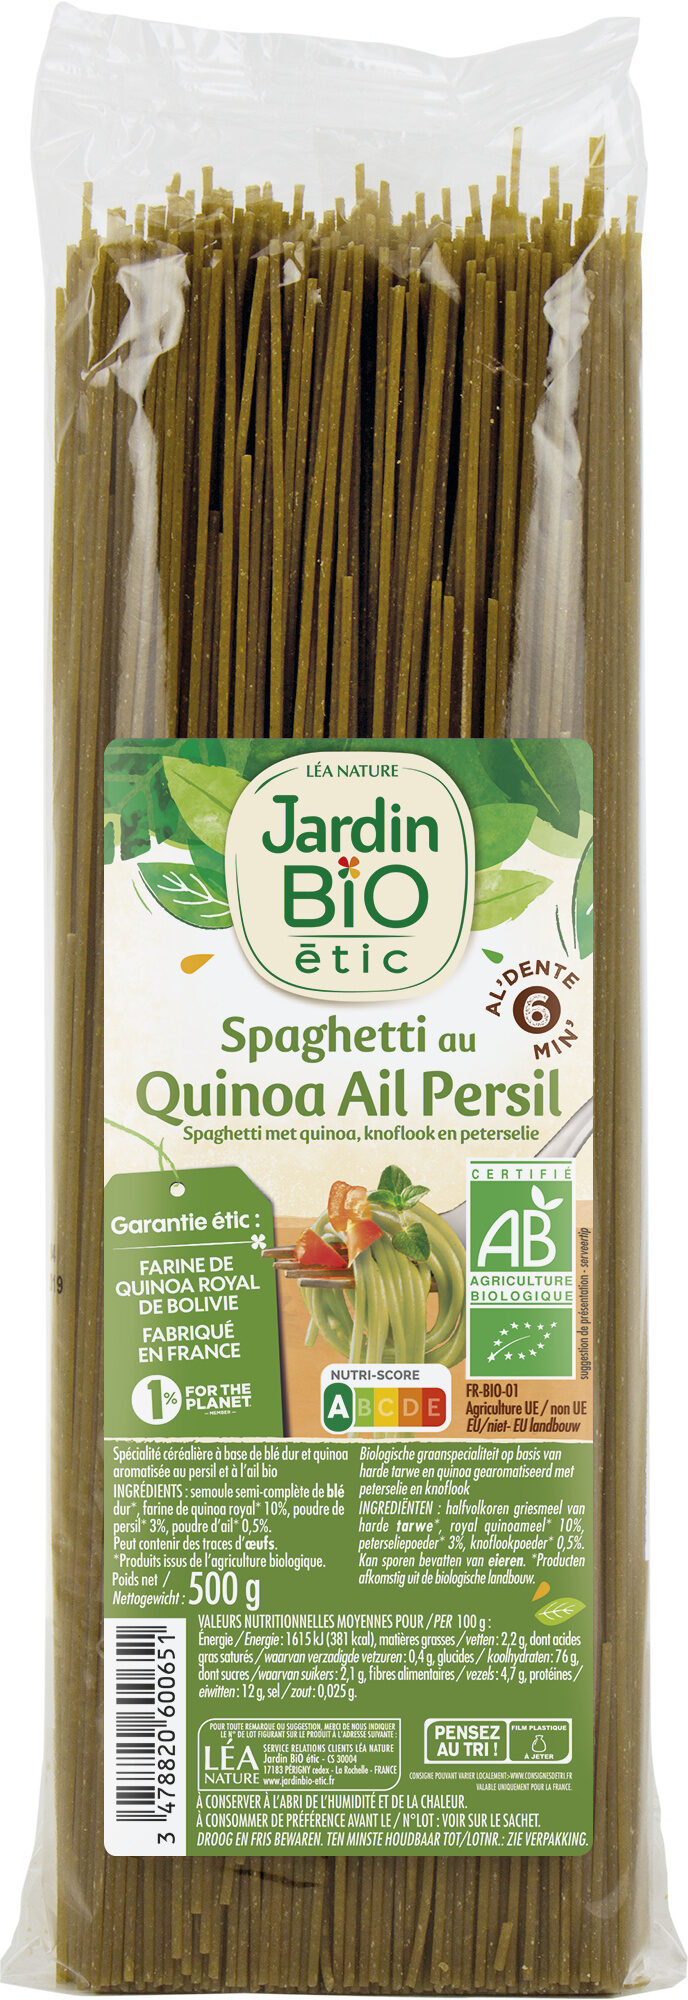 Spaghetti au Quinoa Persil Ail - Produit - fr